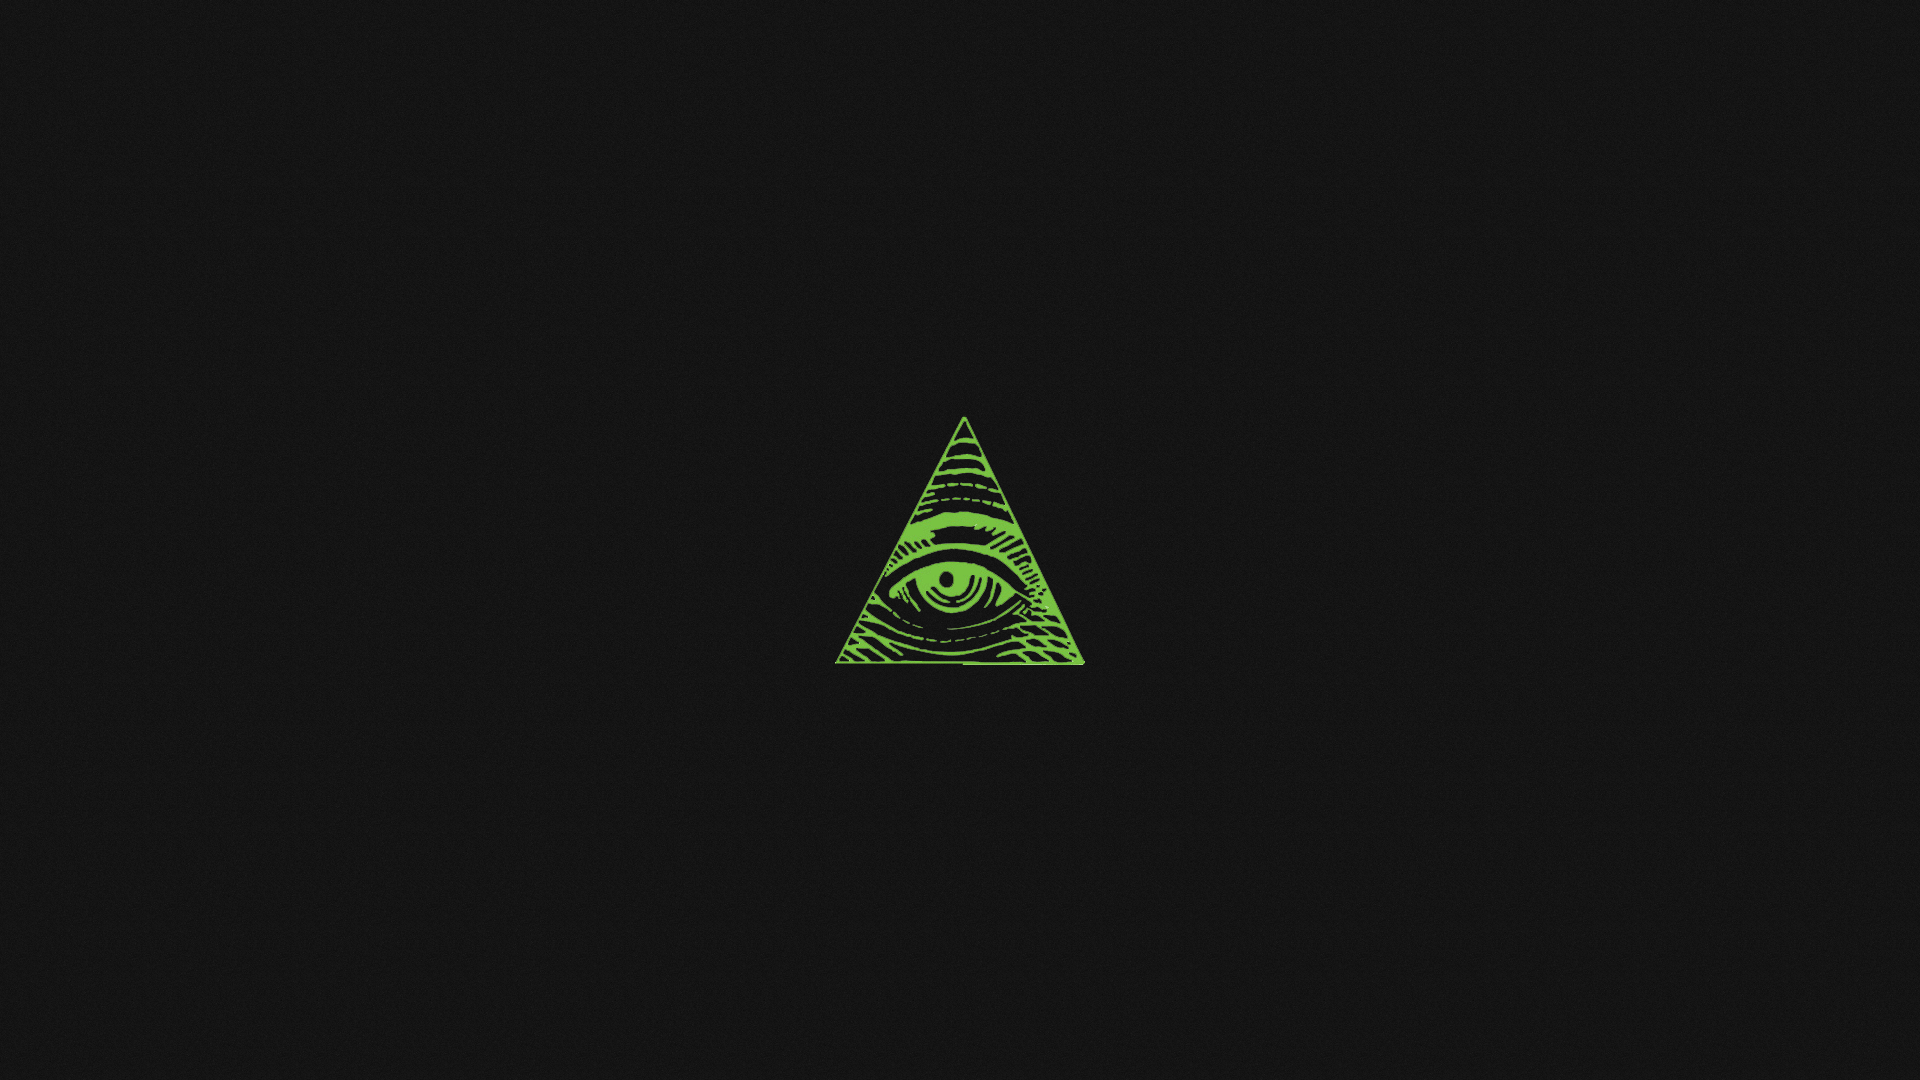 Illuminati Logo Wallpaper PC Android iPhone and iPad Wallpapers